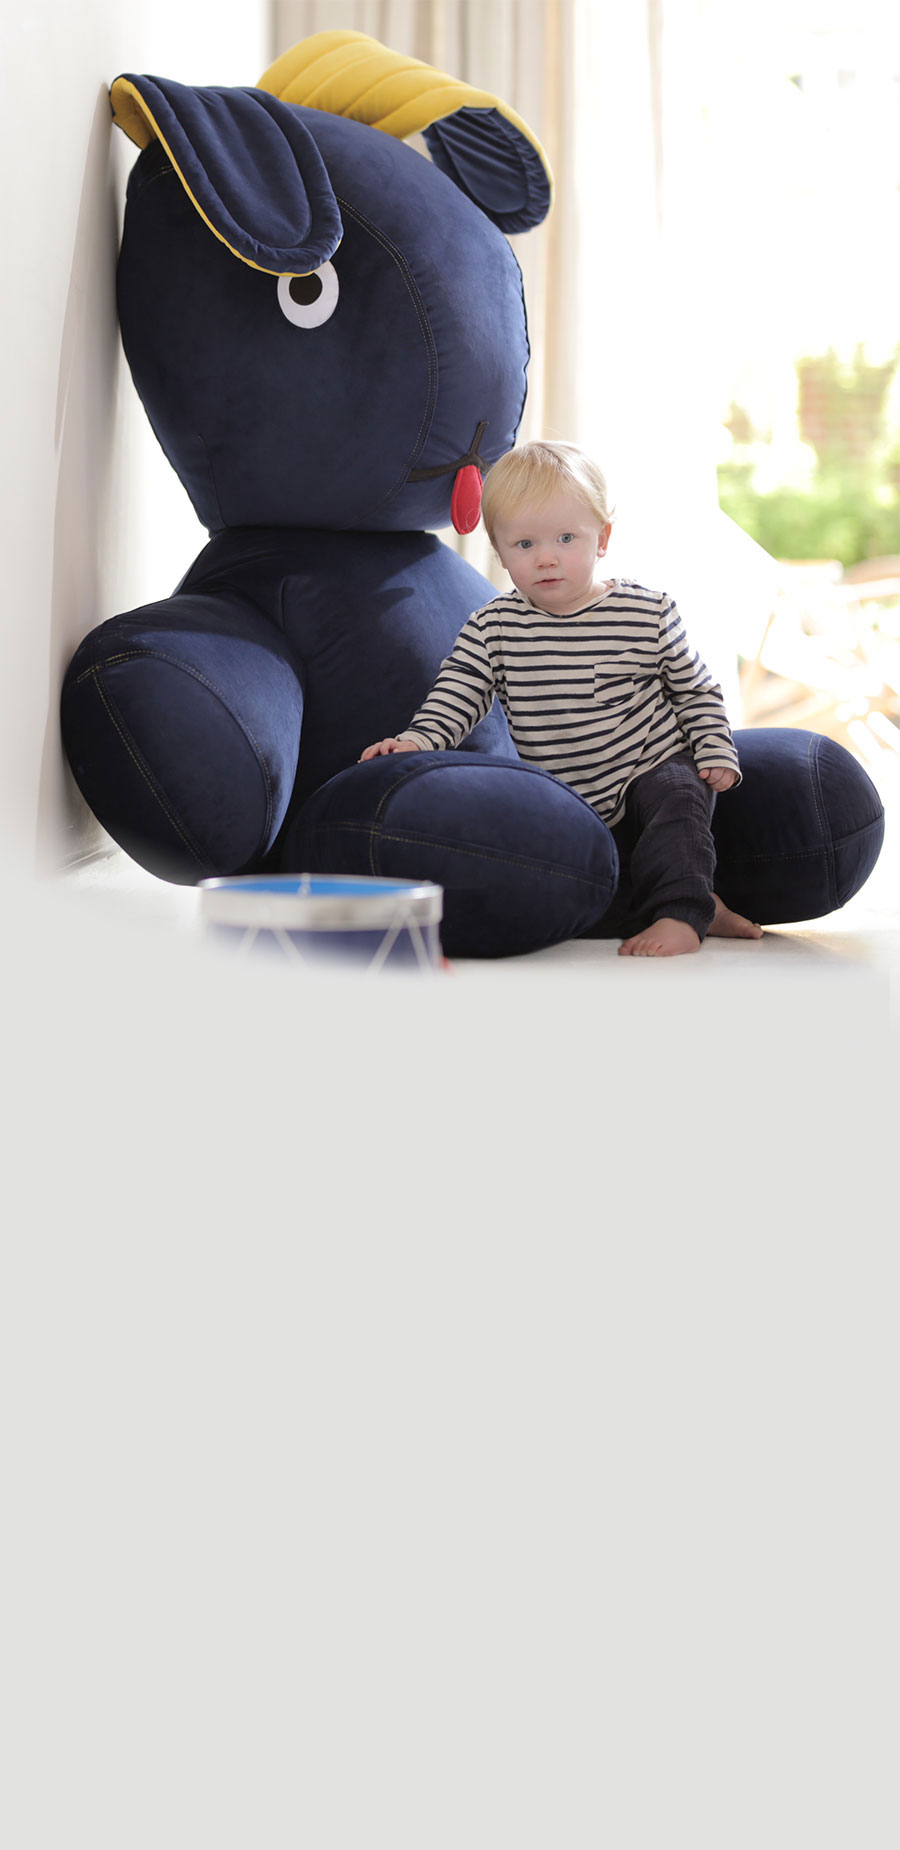 Renaissance Dialoog Wonen Co9 XS Velvet: a big, super-soft stuffed animal | Fatboy